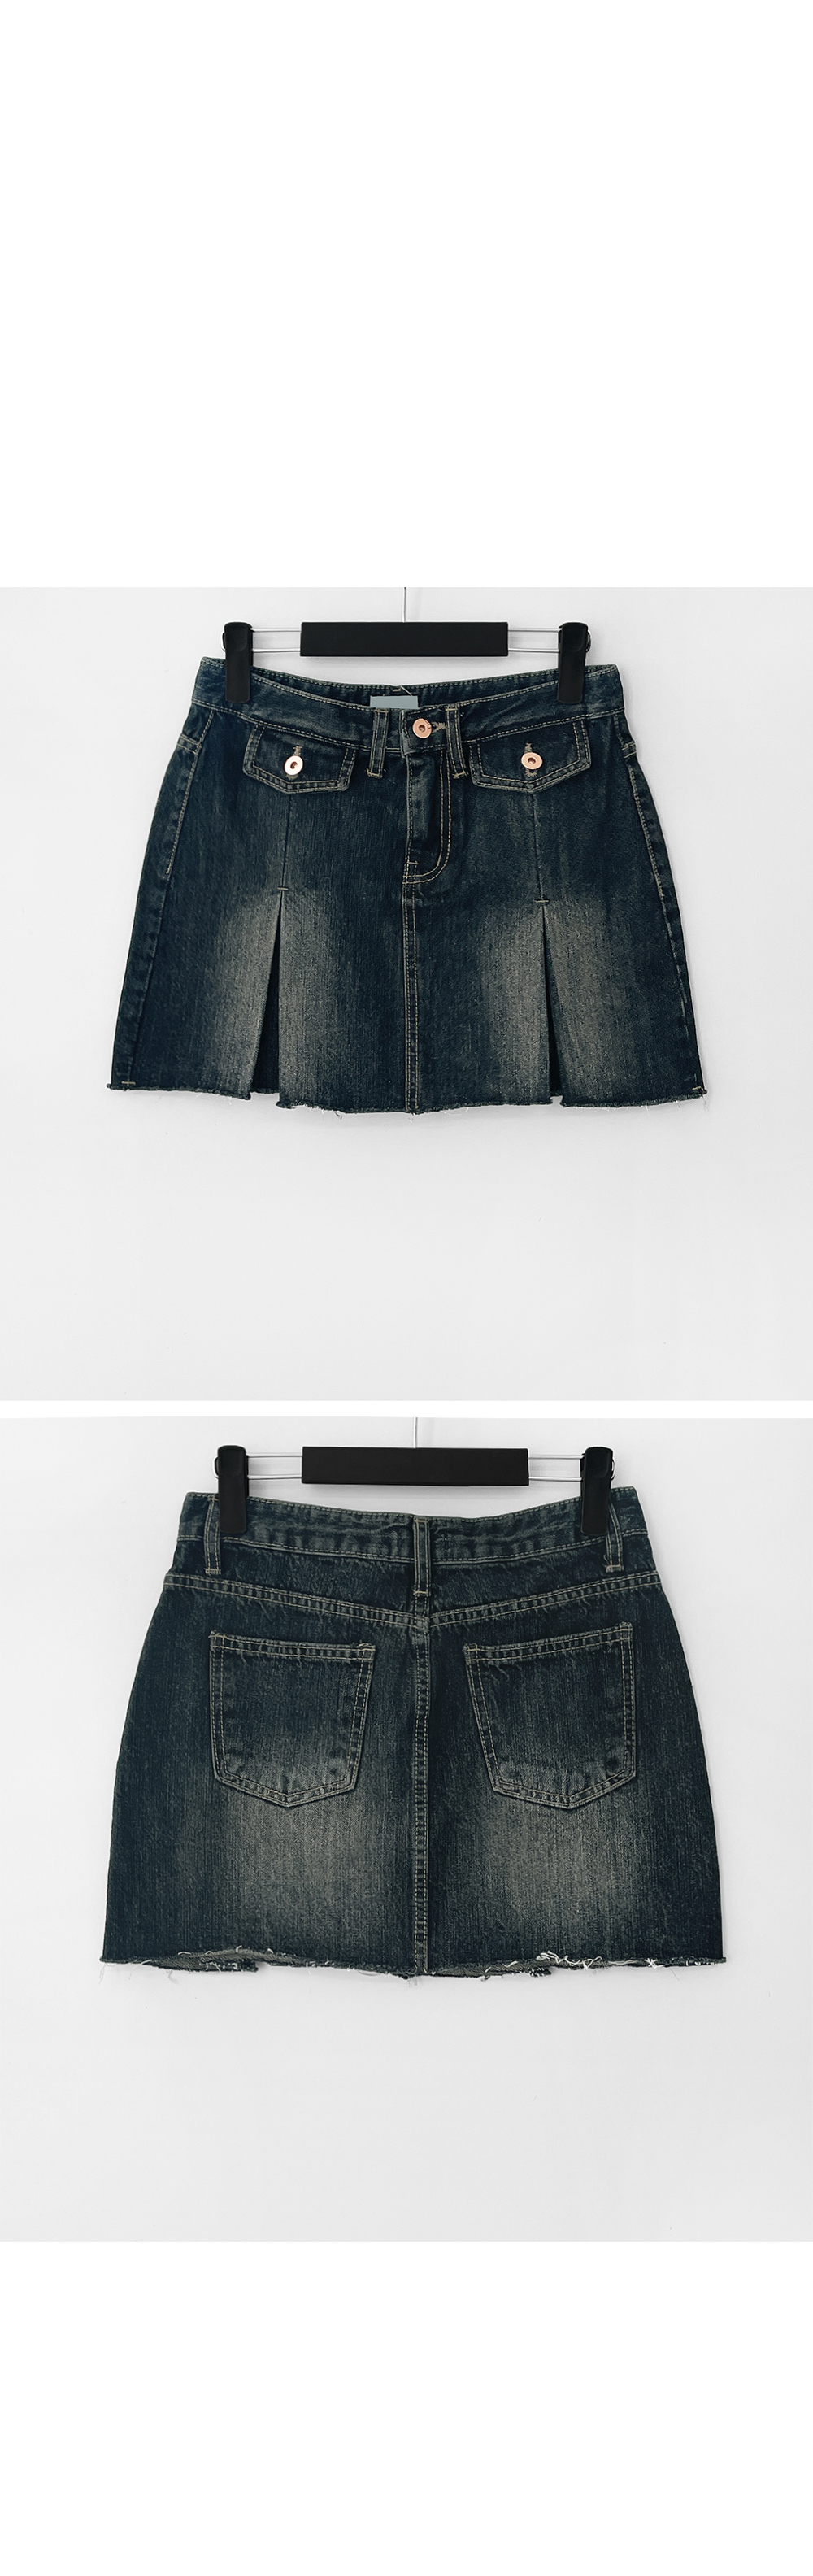 mini skirt grey blue color image-S1L9